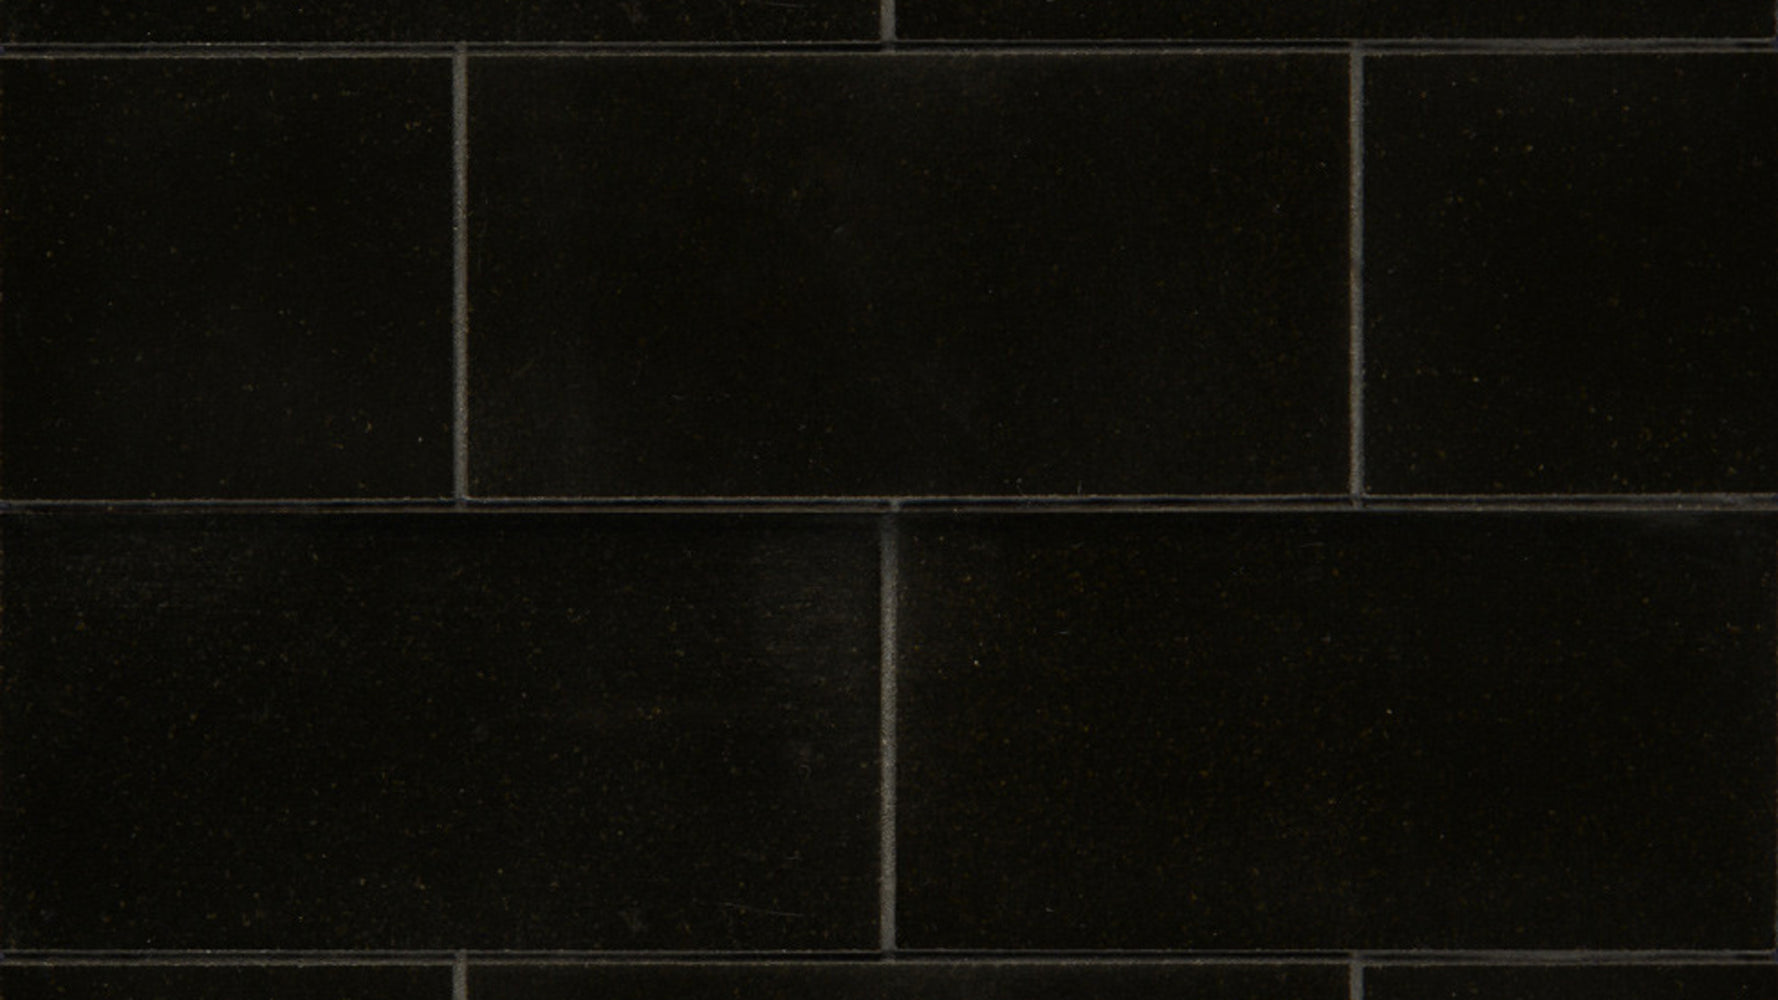 Bedrosians ABSBLK Absolute Black Honed Granite Tile